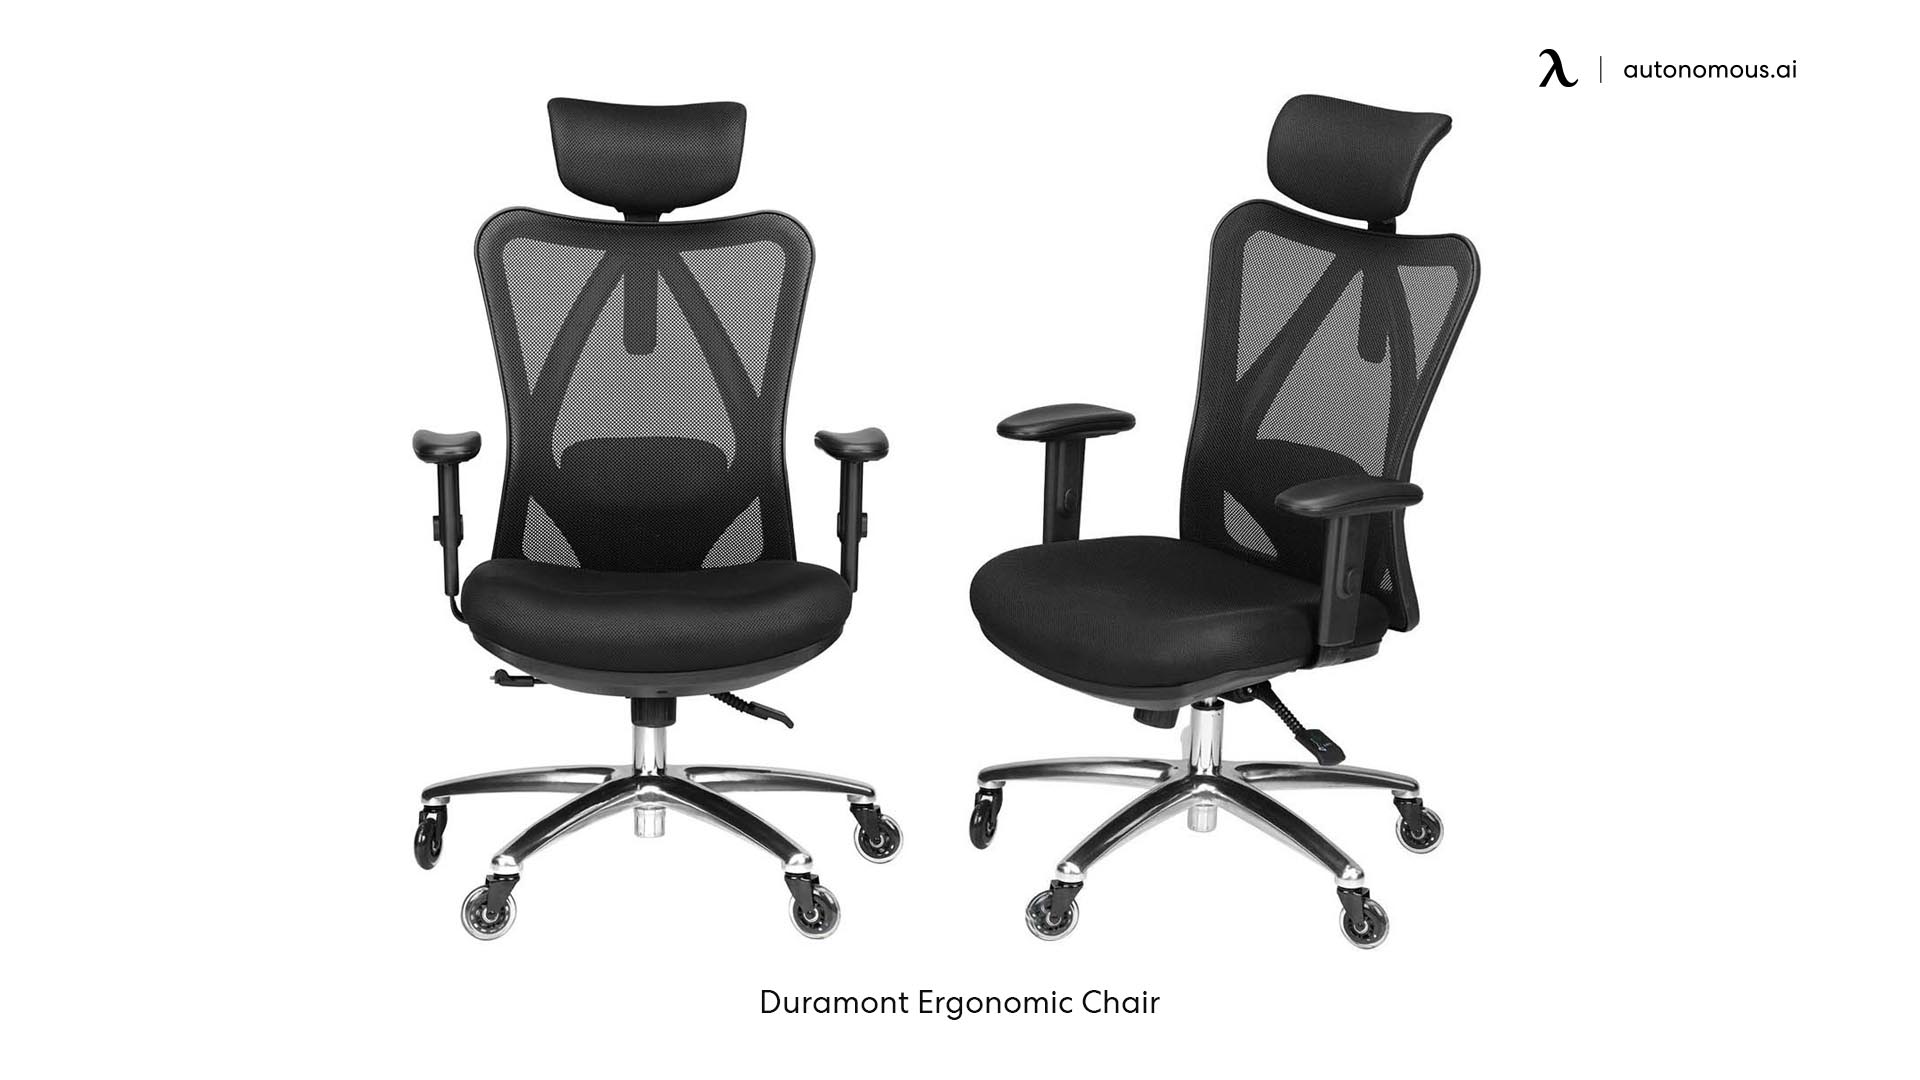 Duramont tall office chair